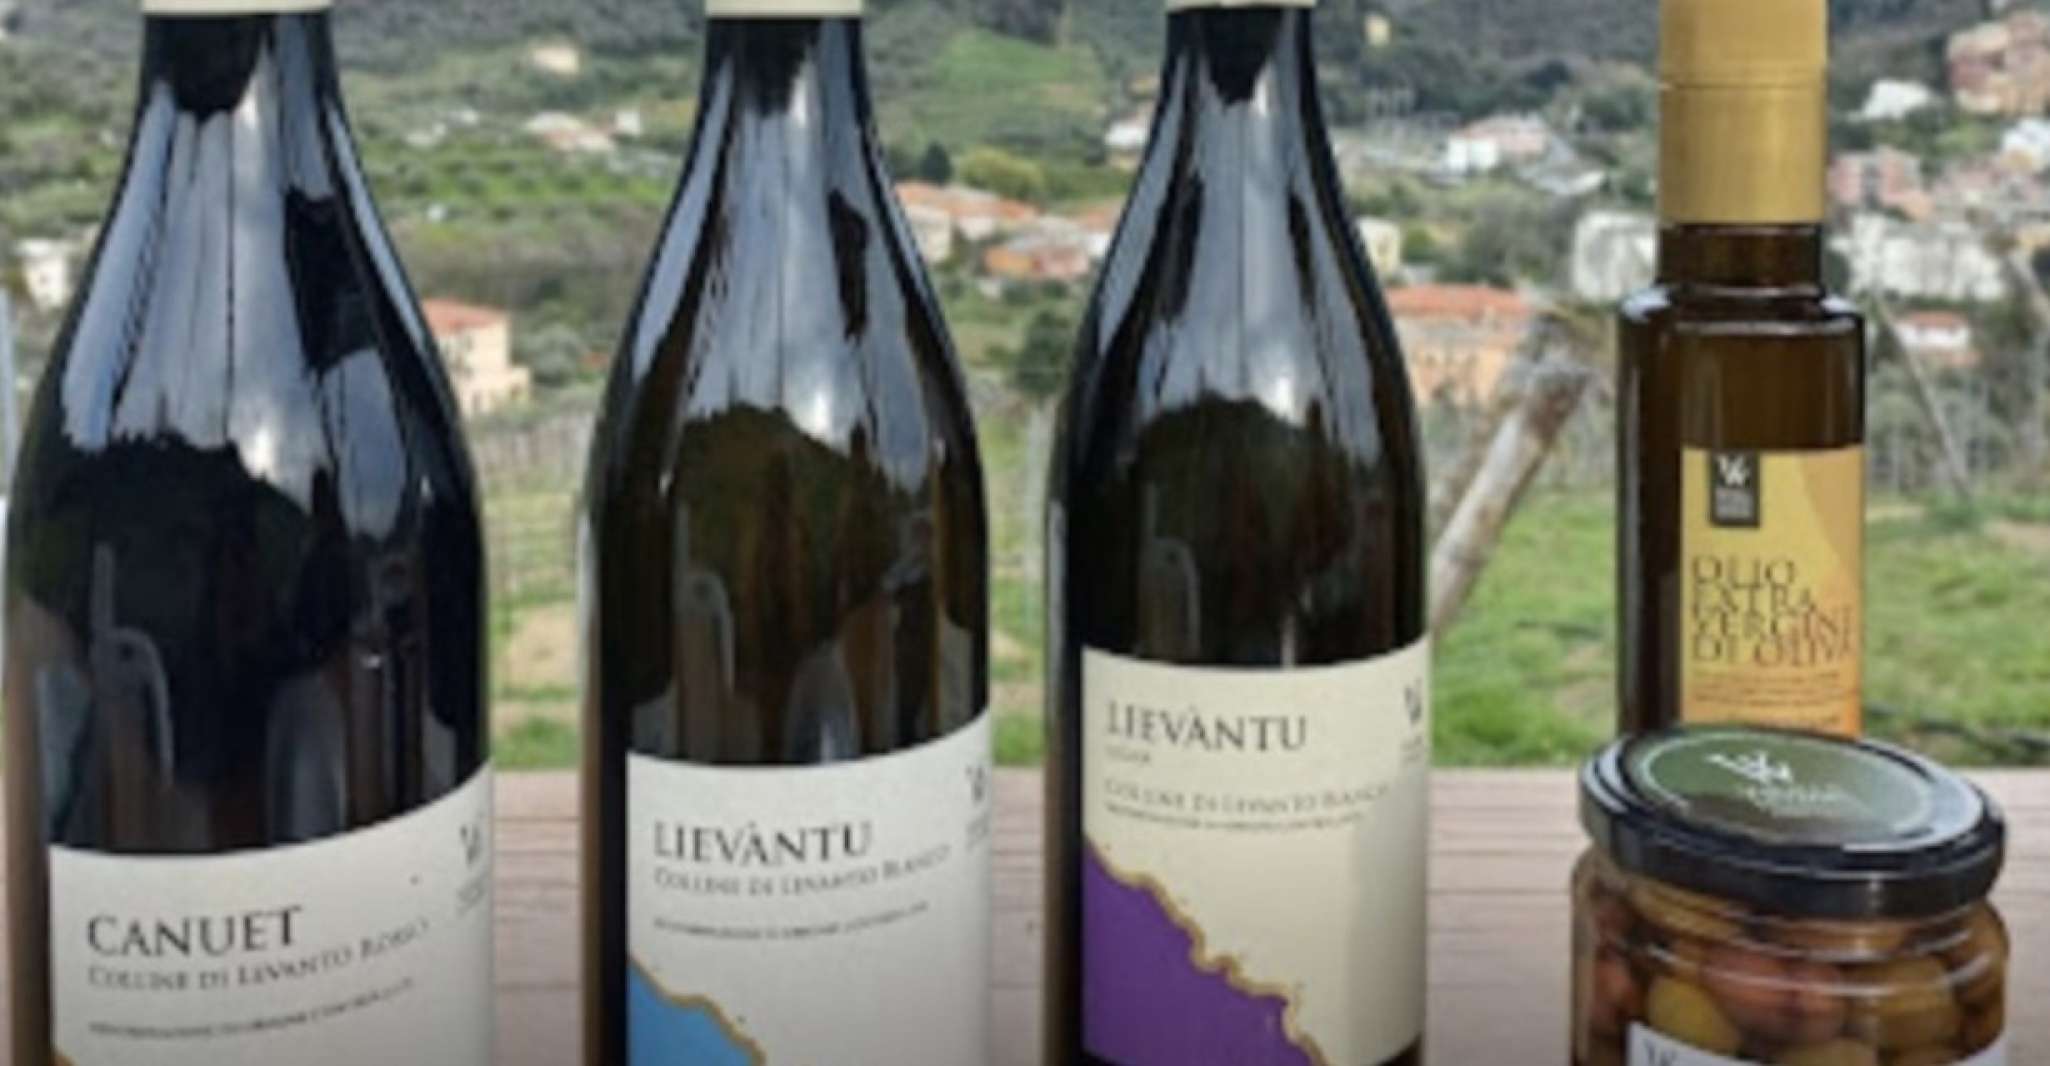 Lievàntu Wine Experience, Tour & tasting in Levanto Valley - Housity